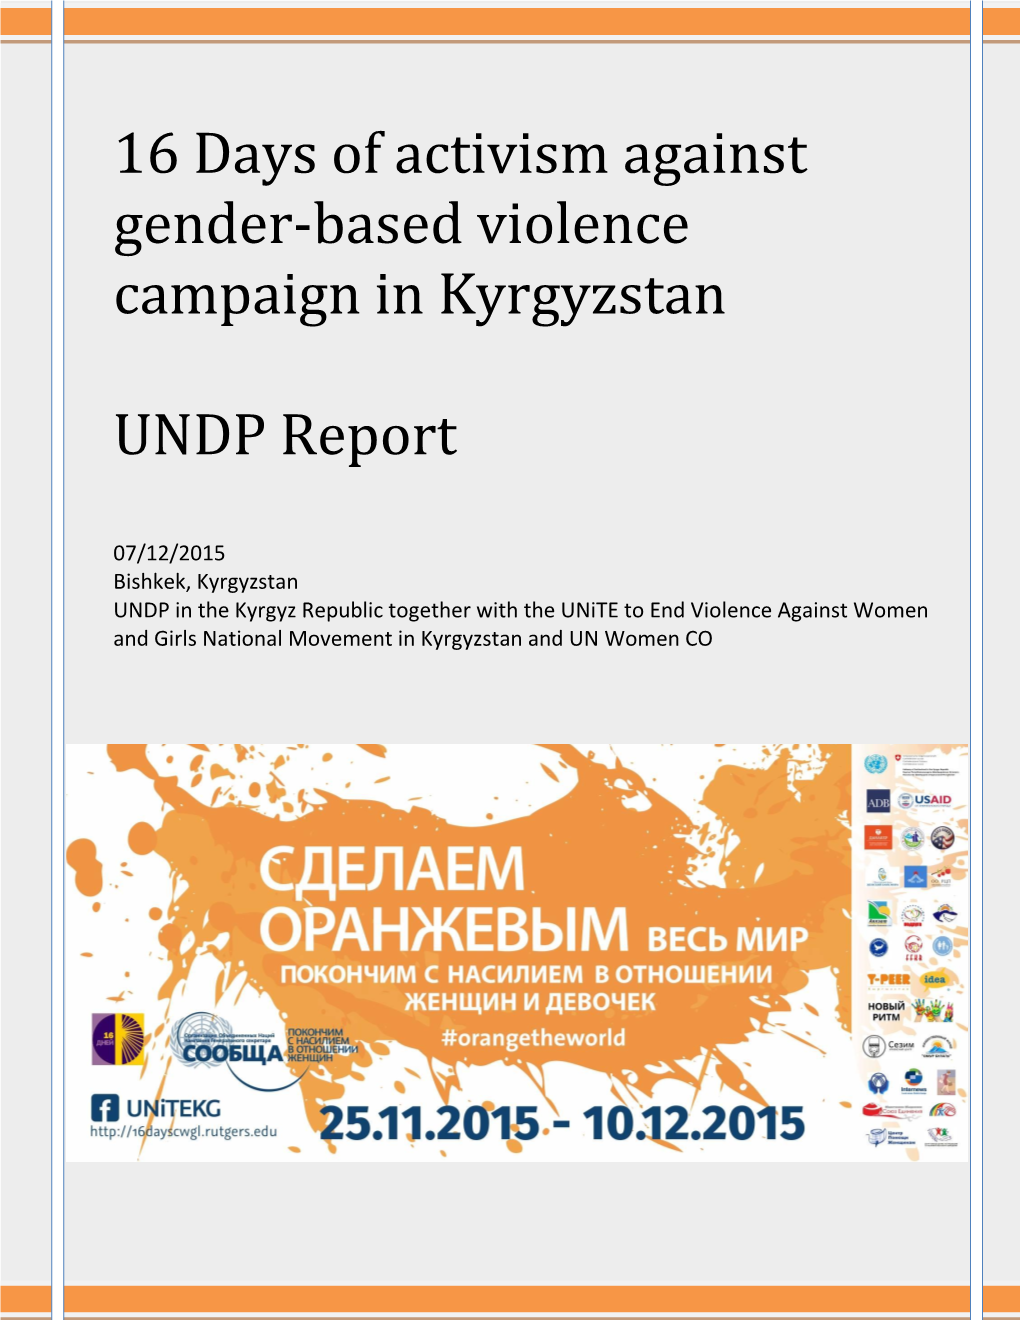 16 Days of Activism Against Gender-Based Violence Campaign in Kyrgyzstan